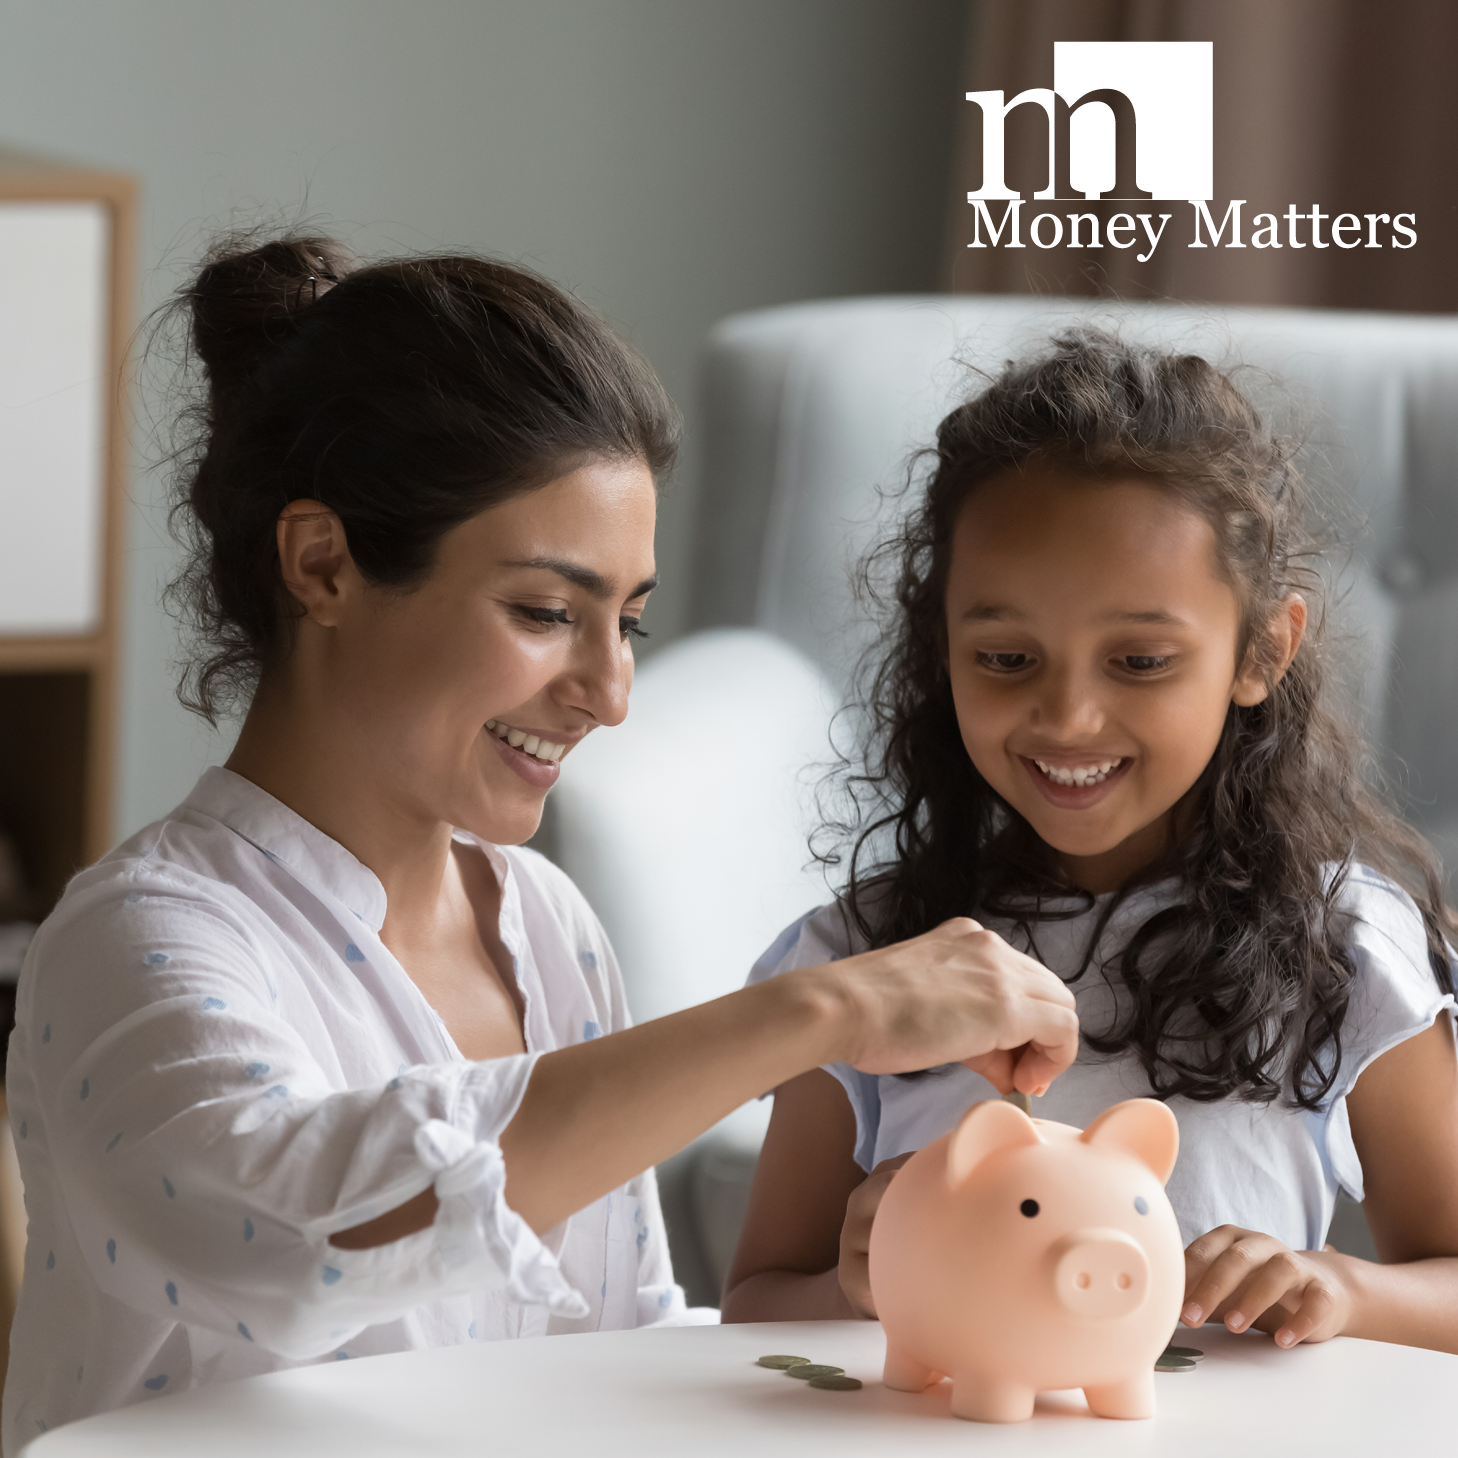 A woman and a girl put money into a piggy bank.